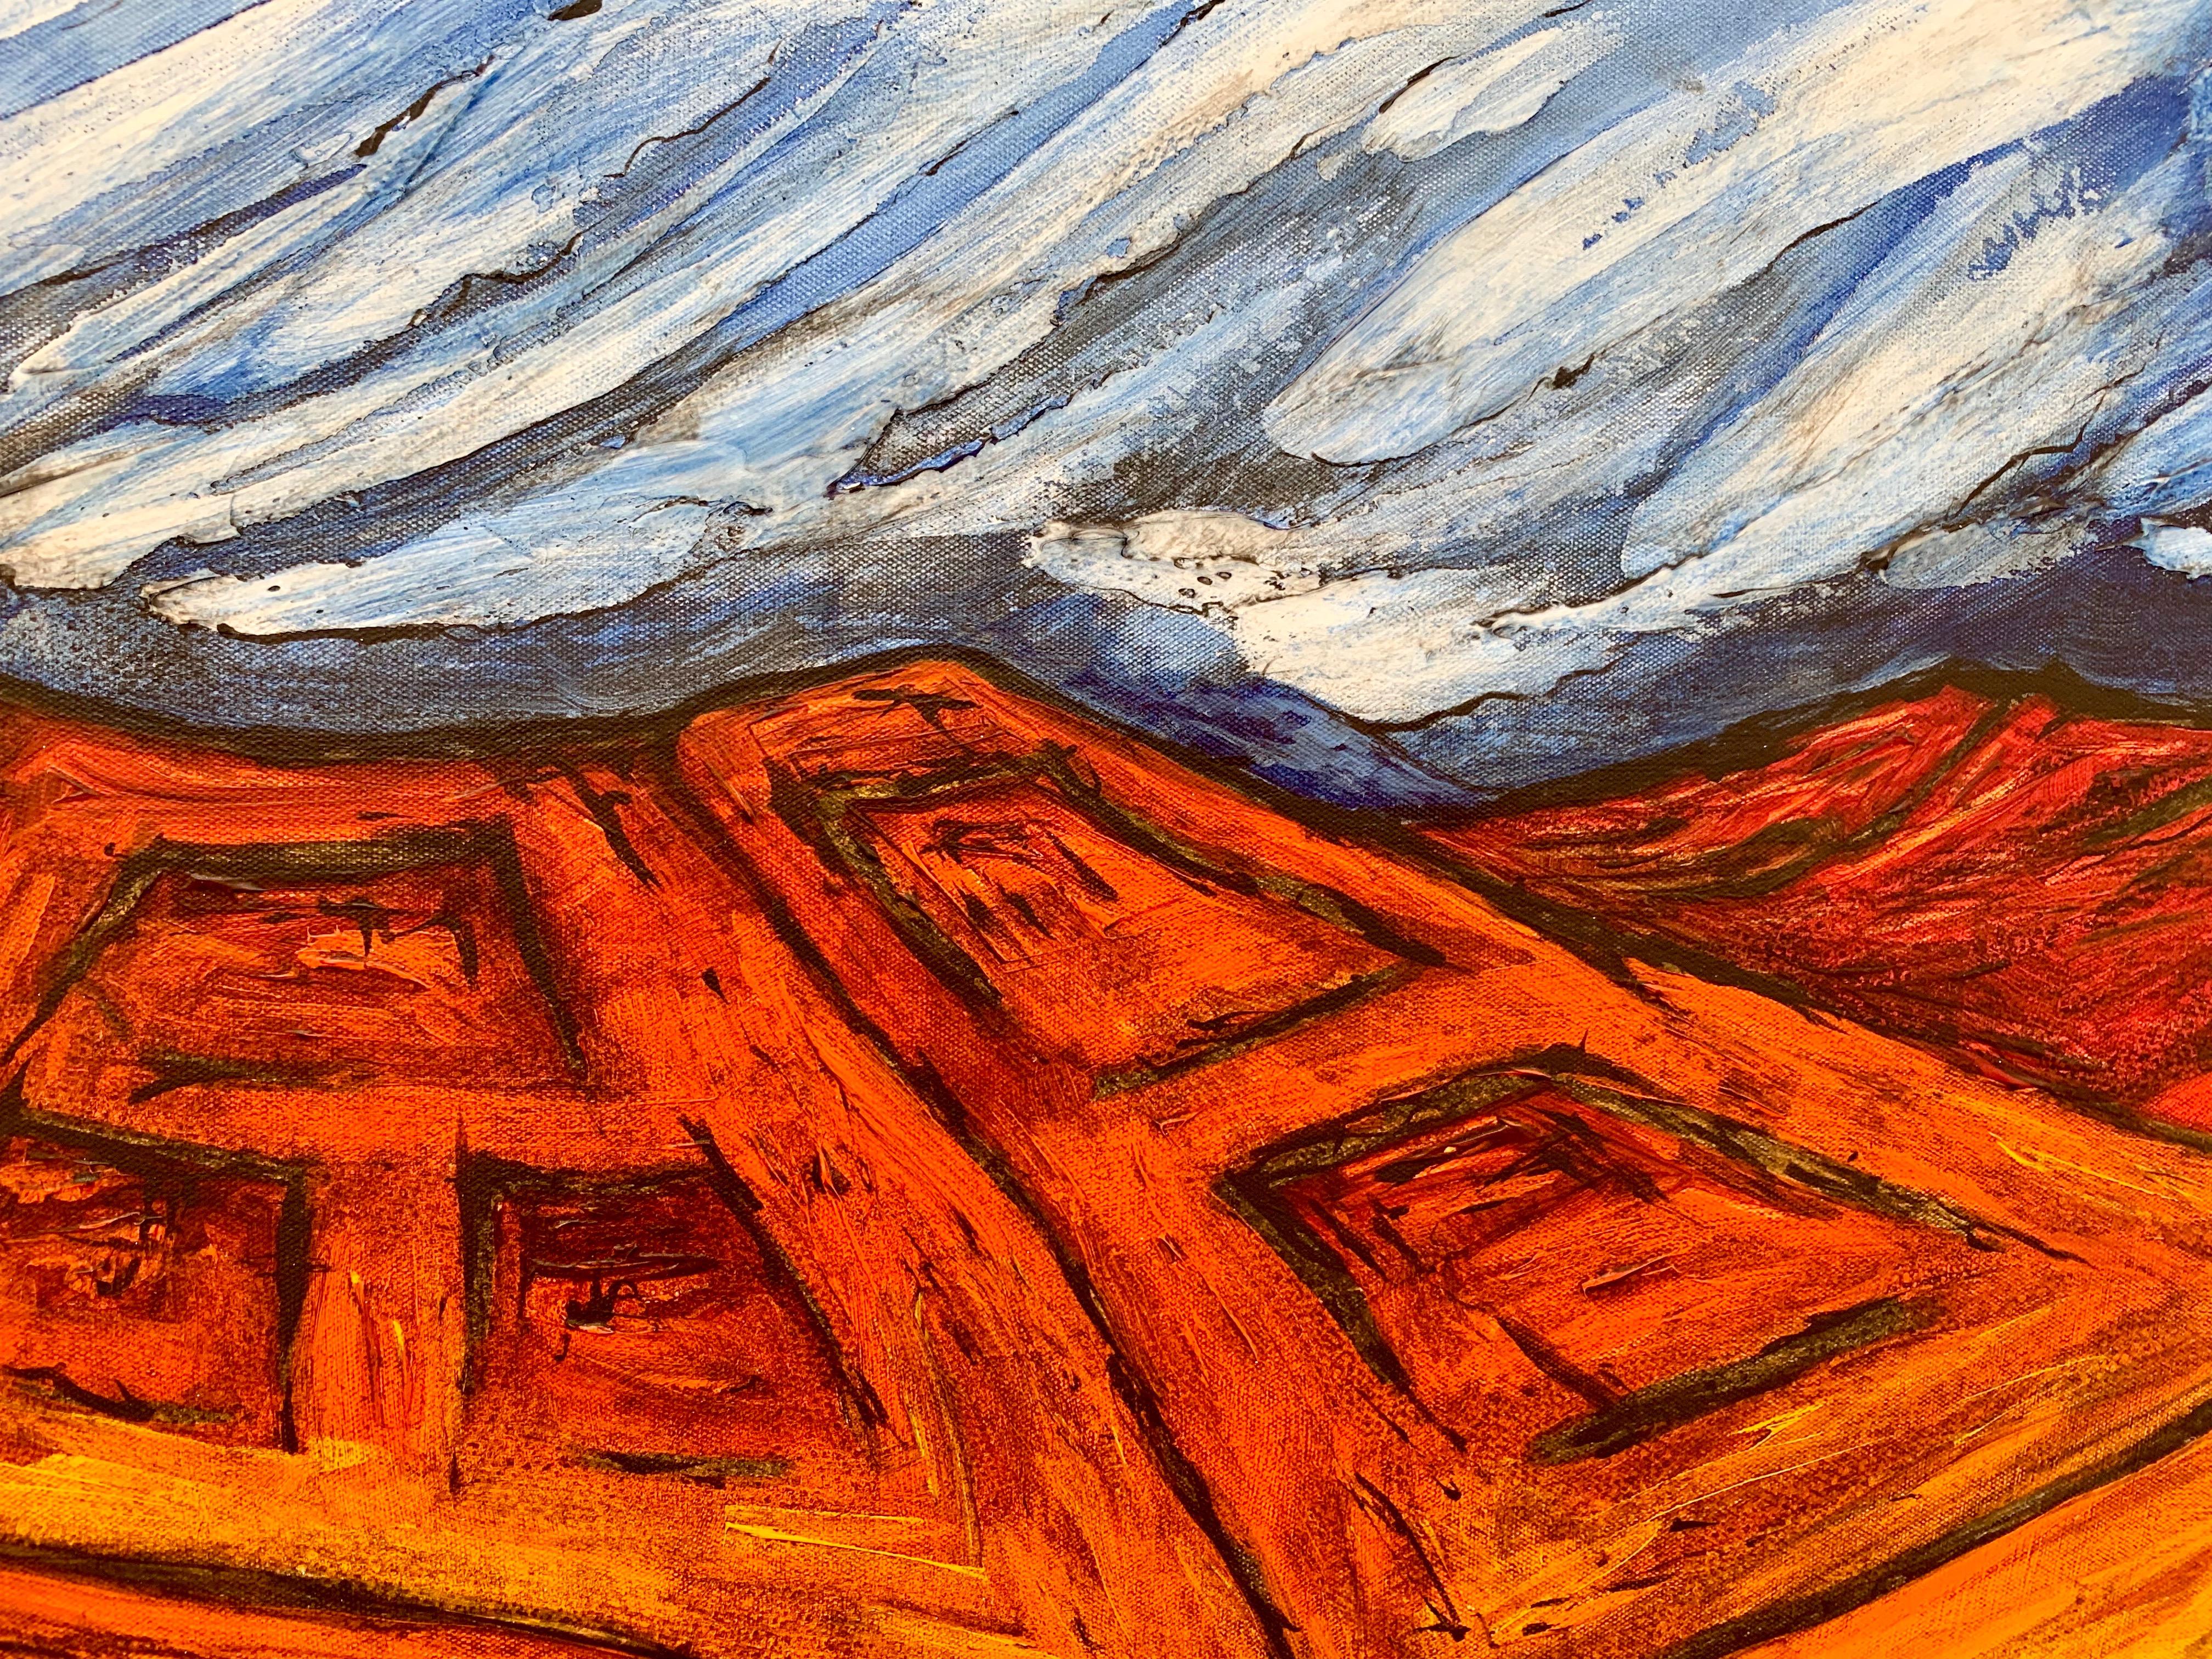 Blue Red Orange Landscape Painting Cubist Fauvist British Expressionist Artist 1